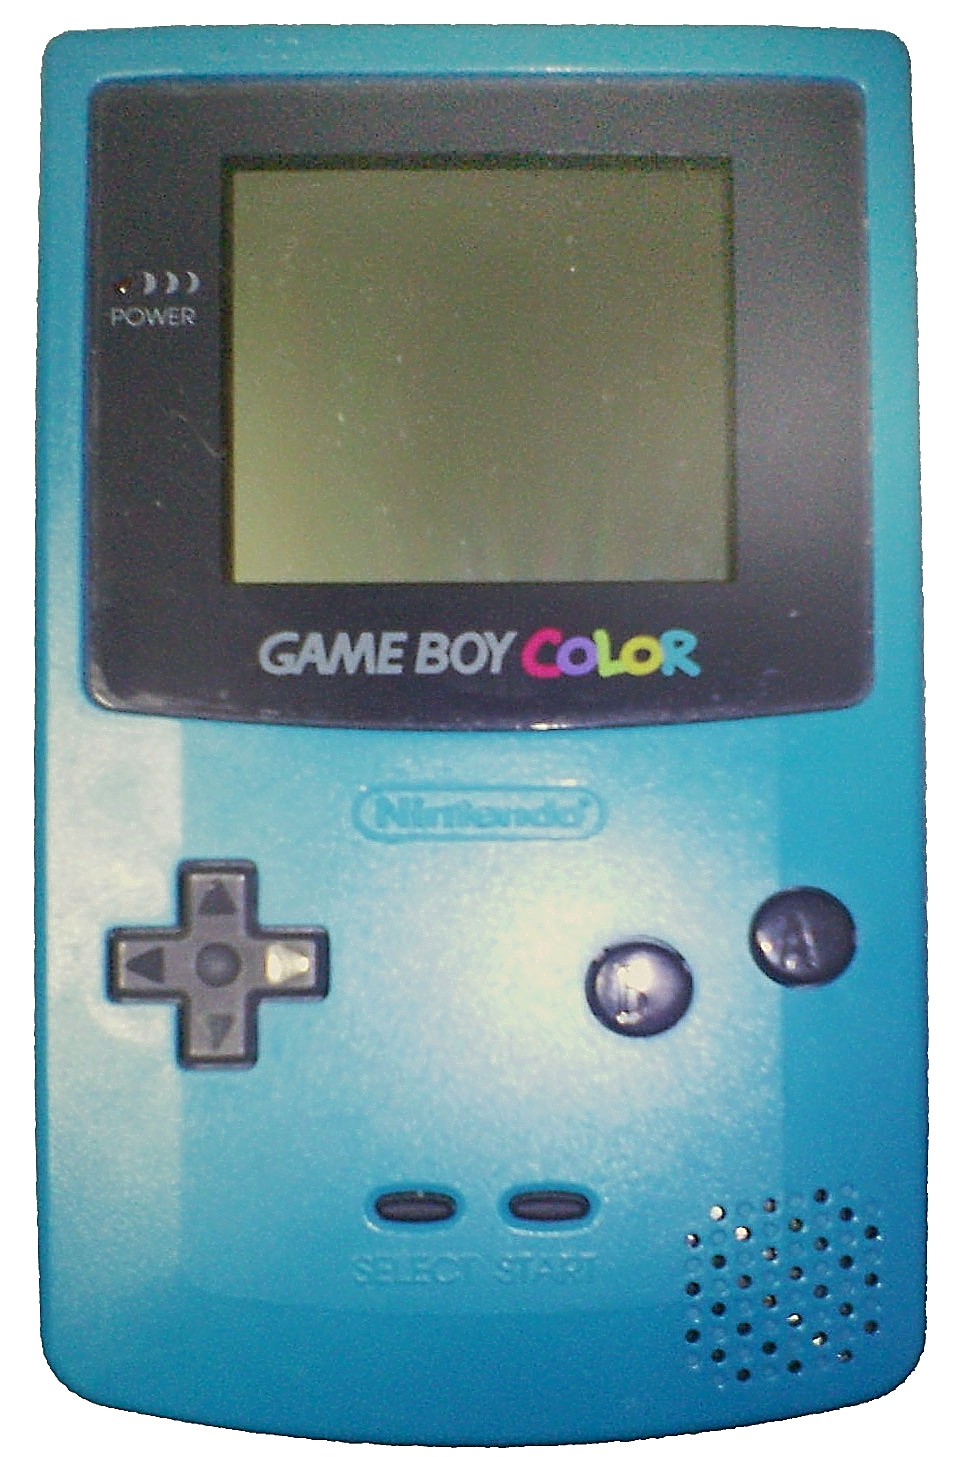 Imagen de la consola portátil Nintendo Game Boy Color, 1998, Fotografía: PiaCarrot (cc:by-sa)